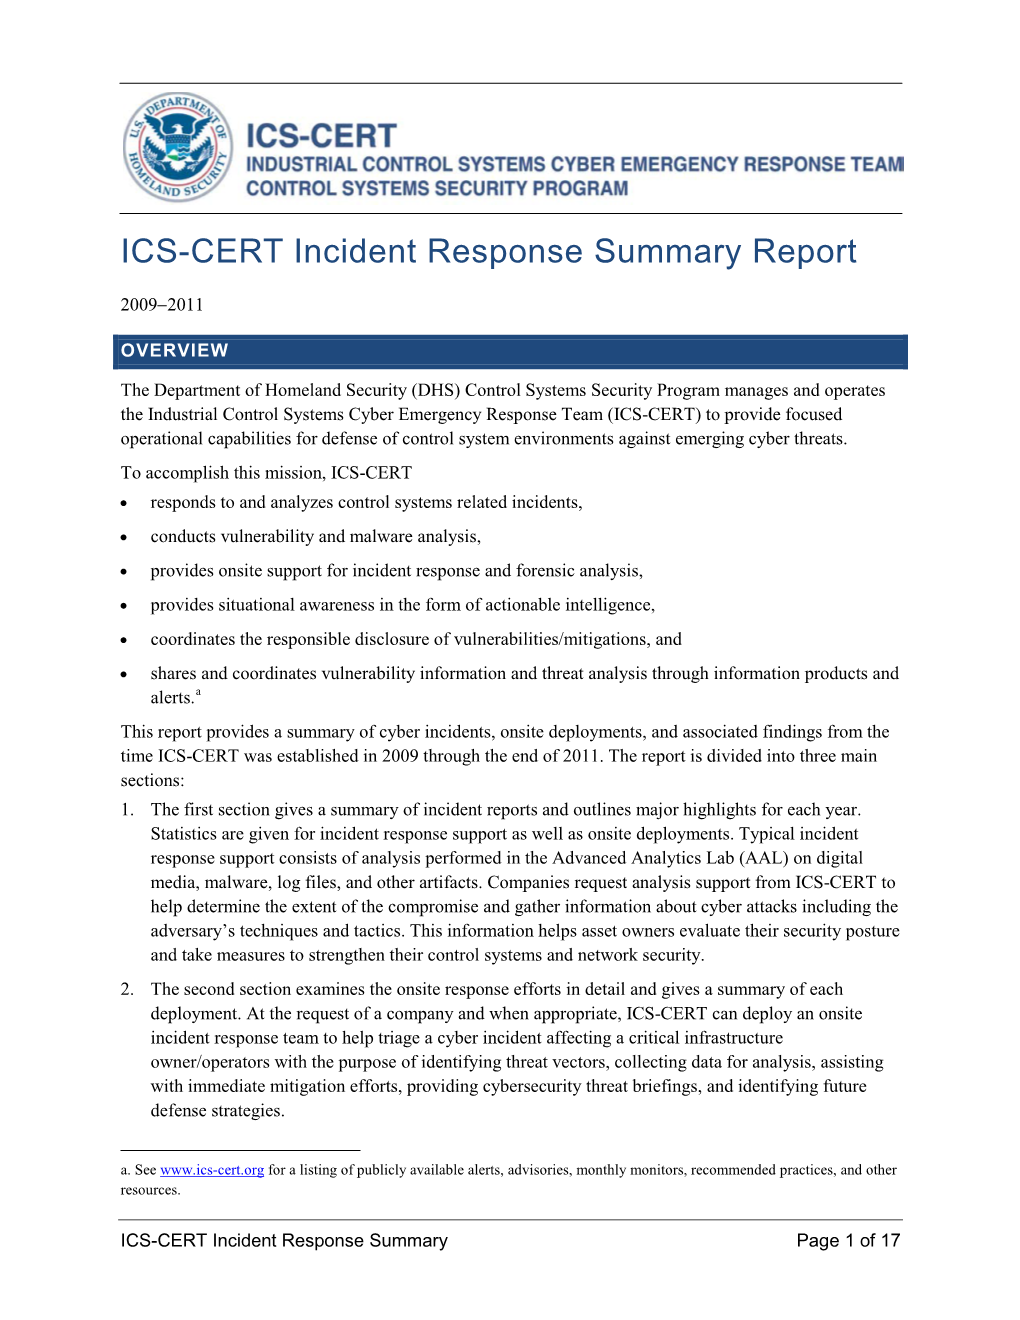 ICS-CERT Incident Response Summary Report (2009-2011)